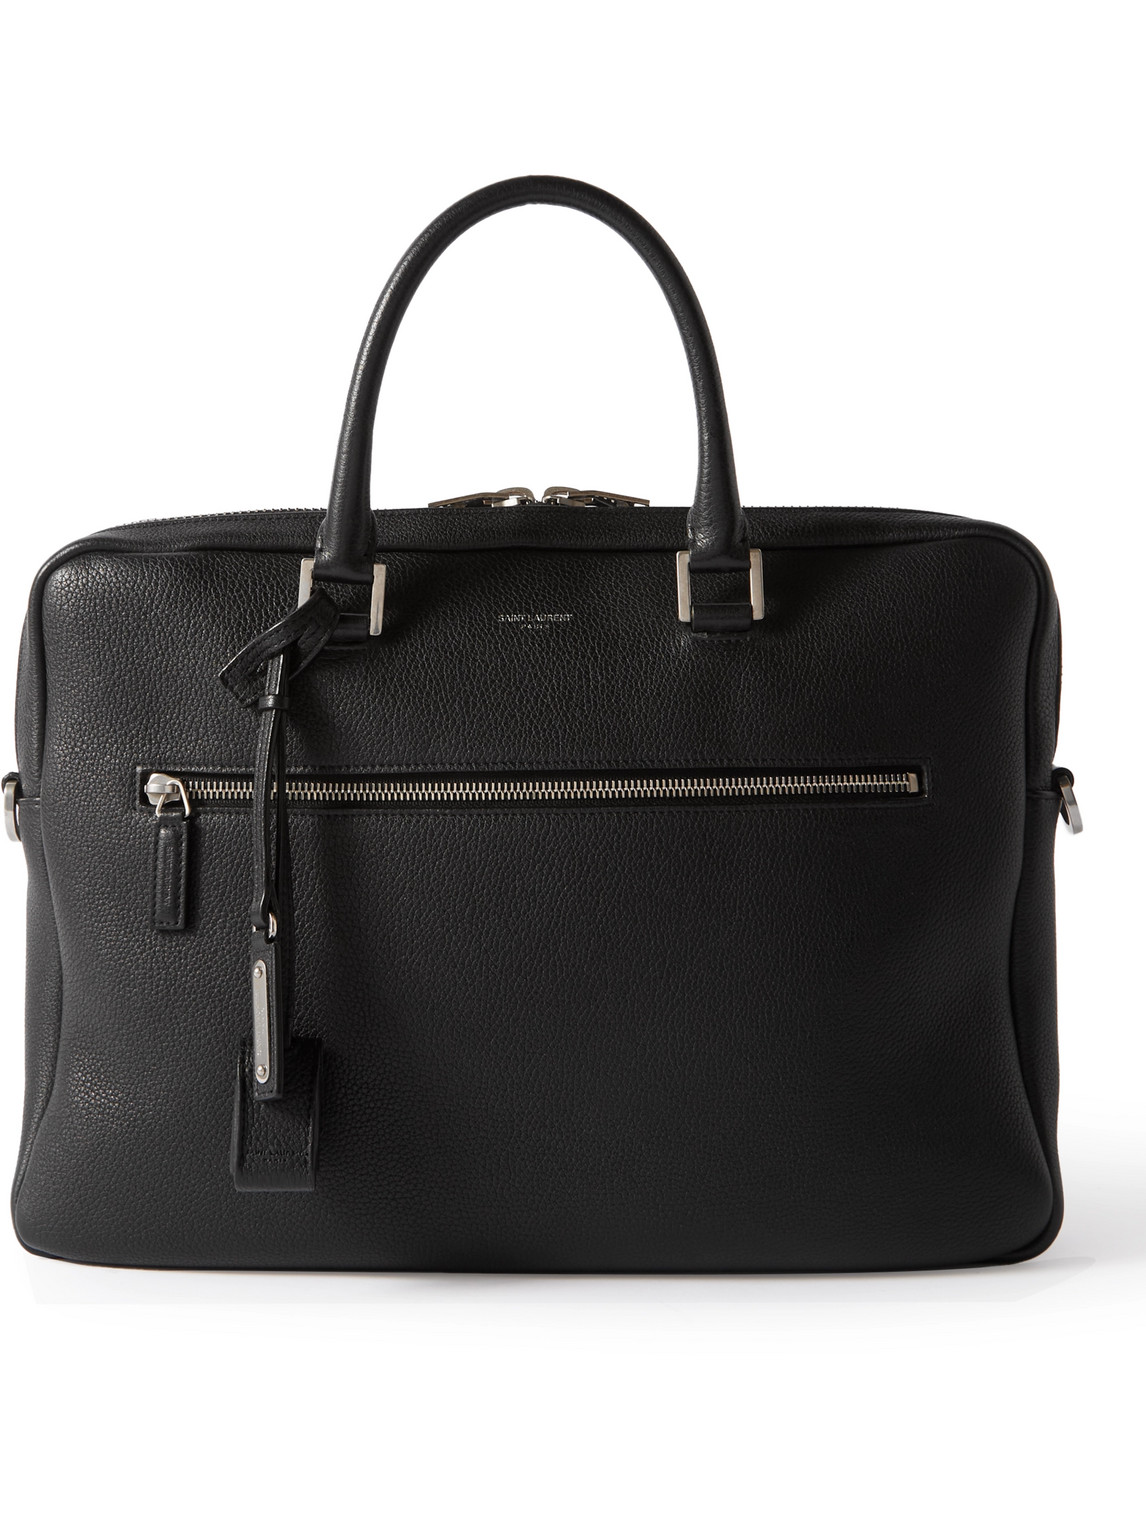 Saint Laurent Sac De Jour Full-grain Leather Briefcase In Black